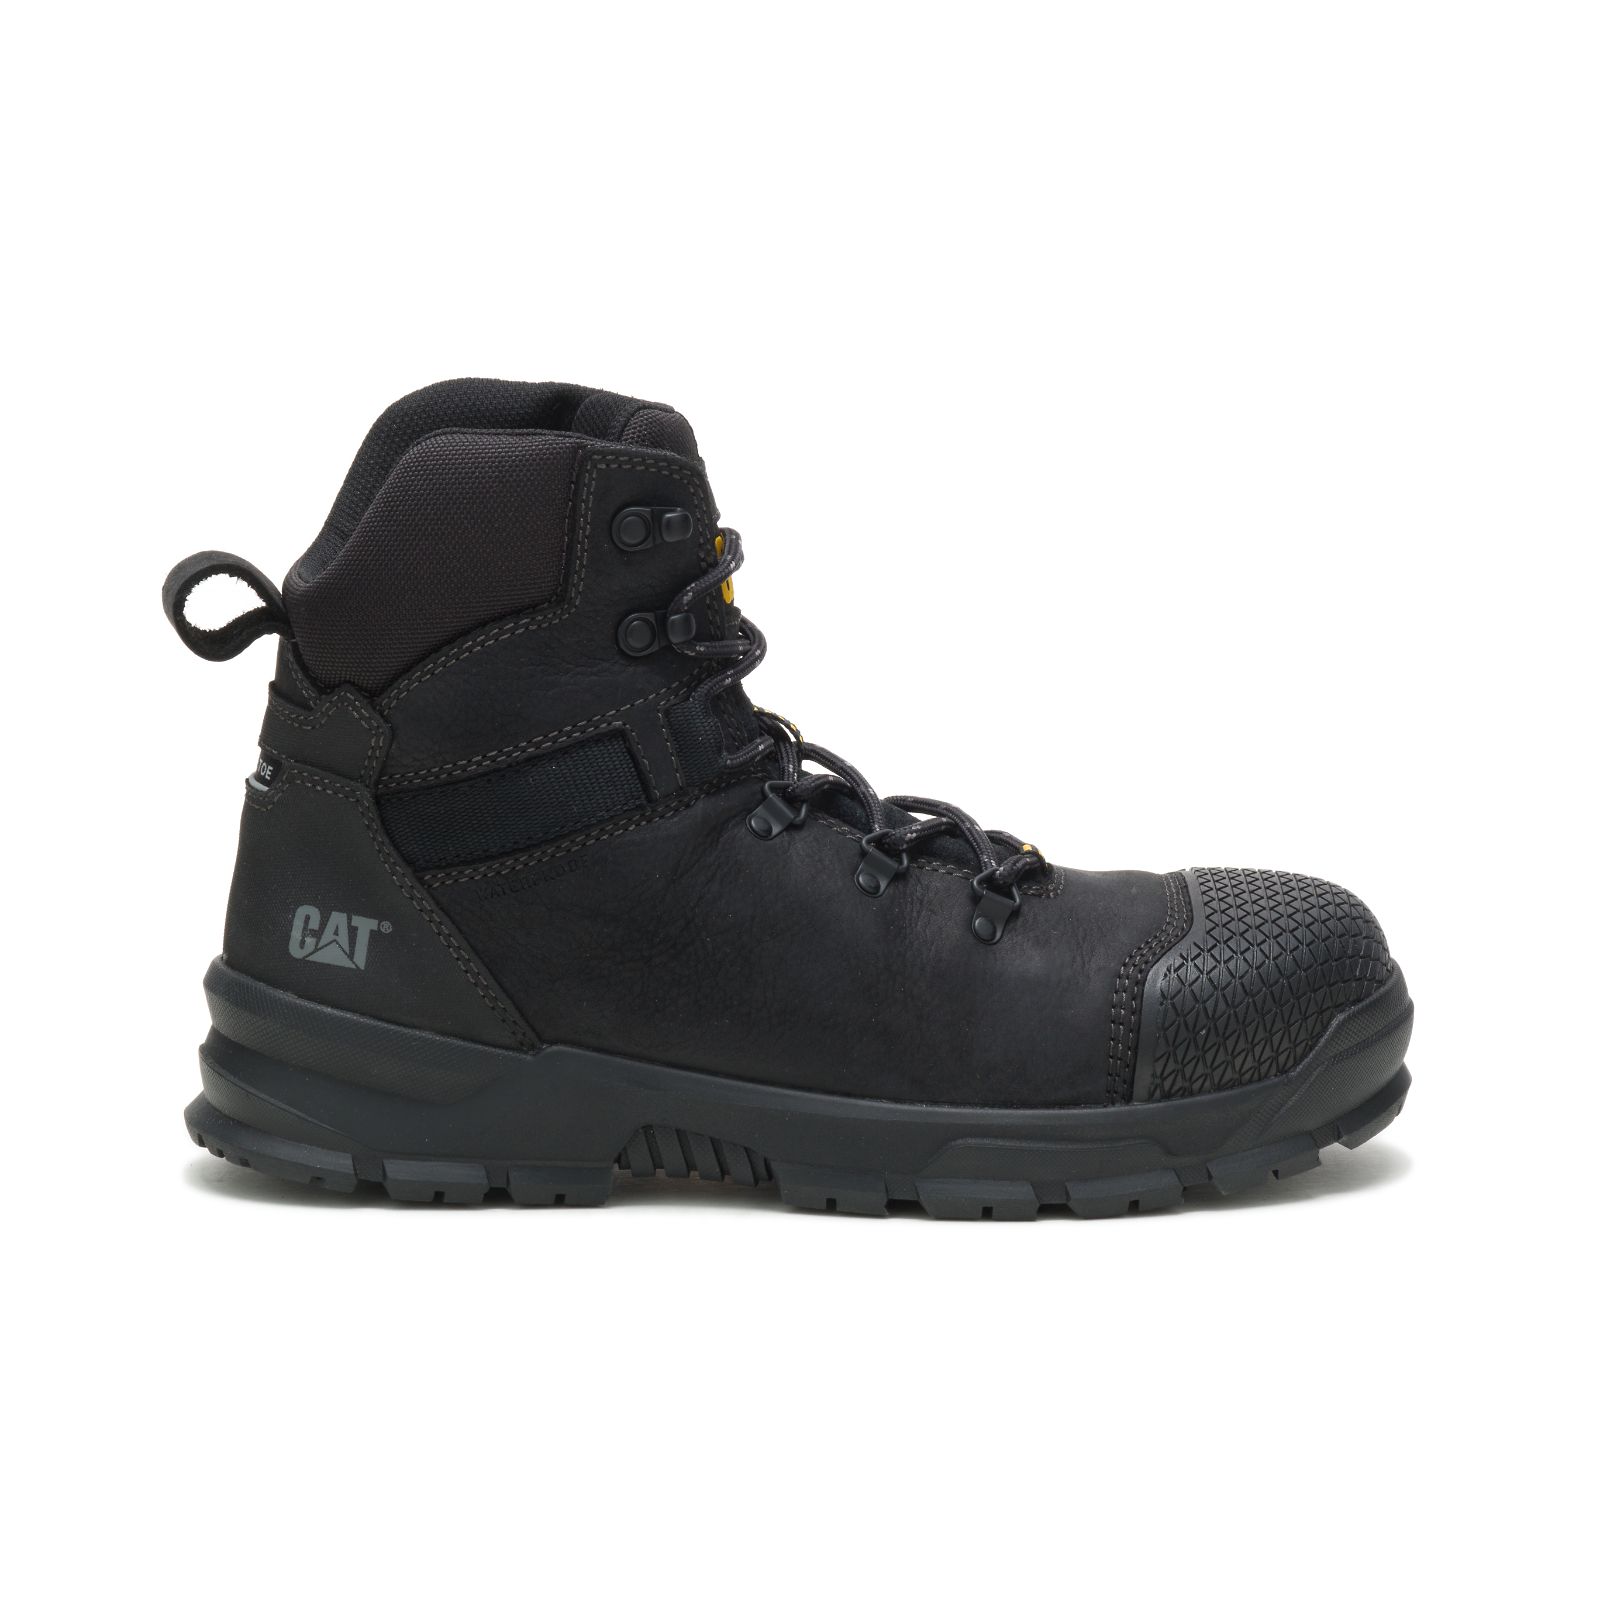 Caterpillar Accomplice X Waterproof Steel Toe Philippines - Mens Work Boots - Black 10465OXEF